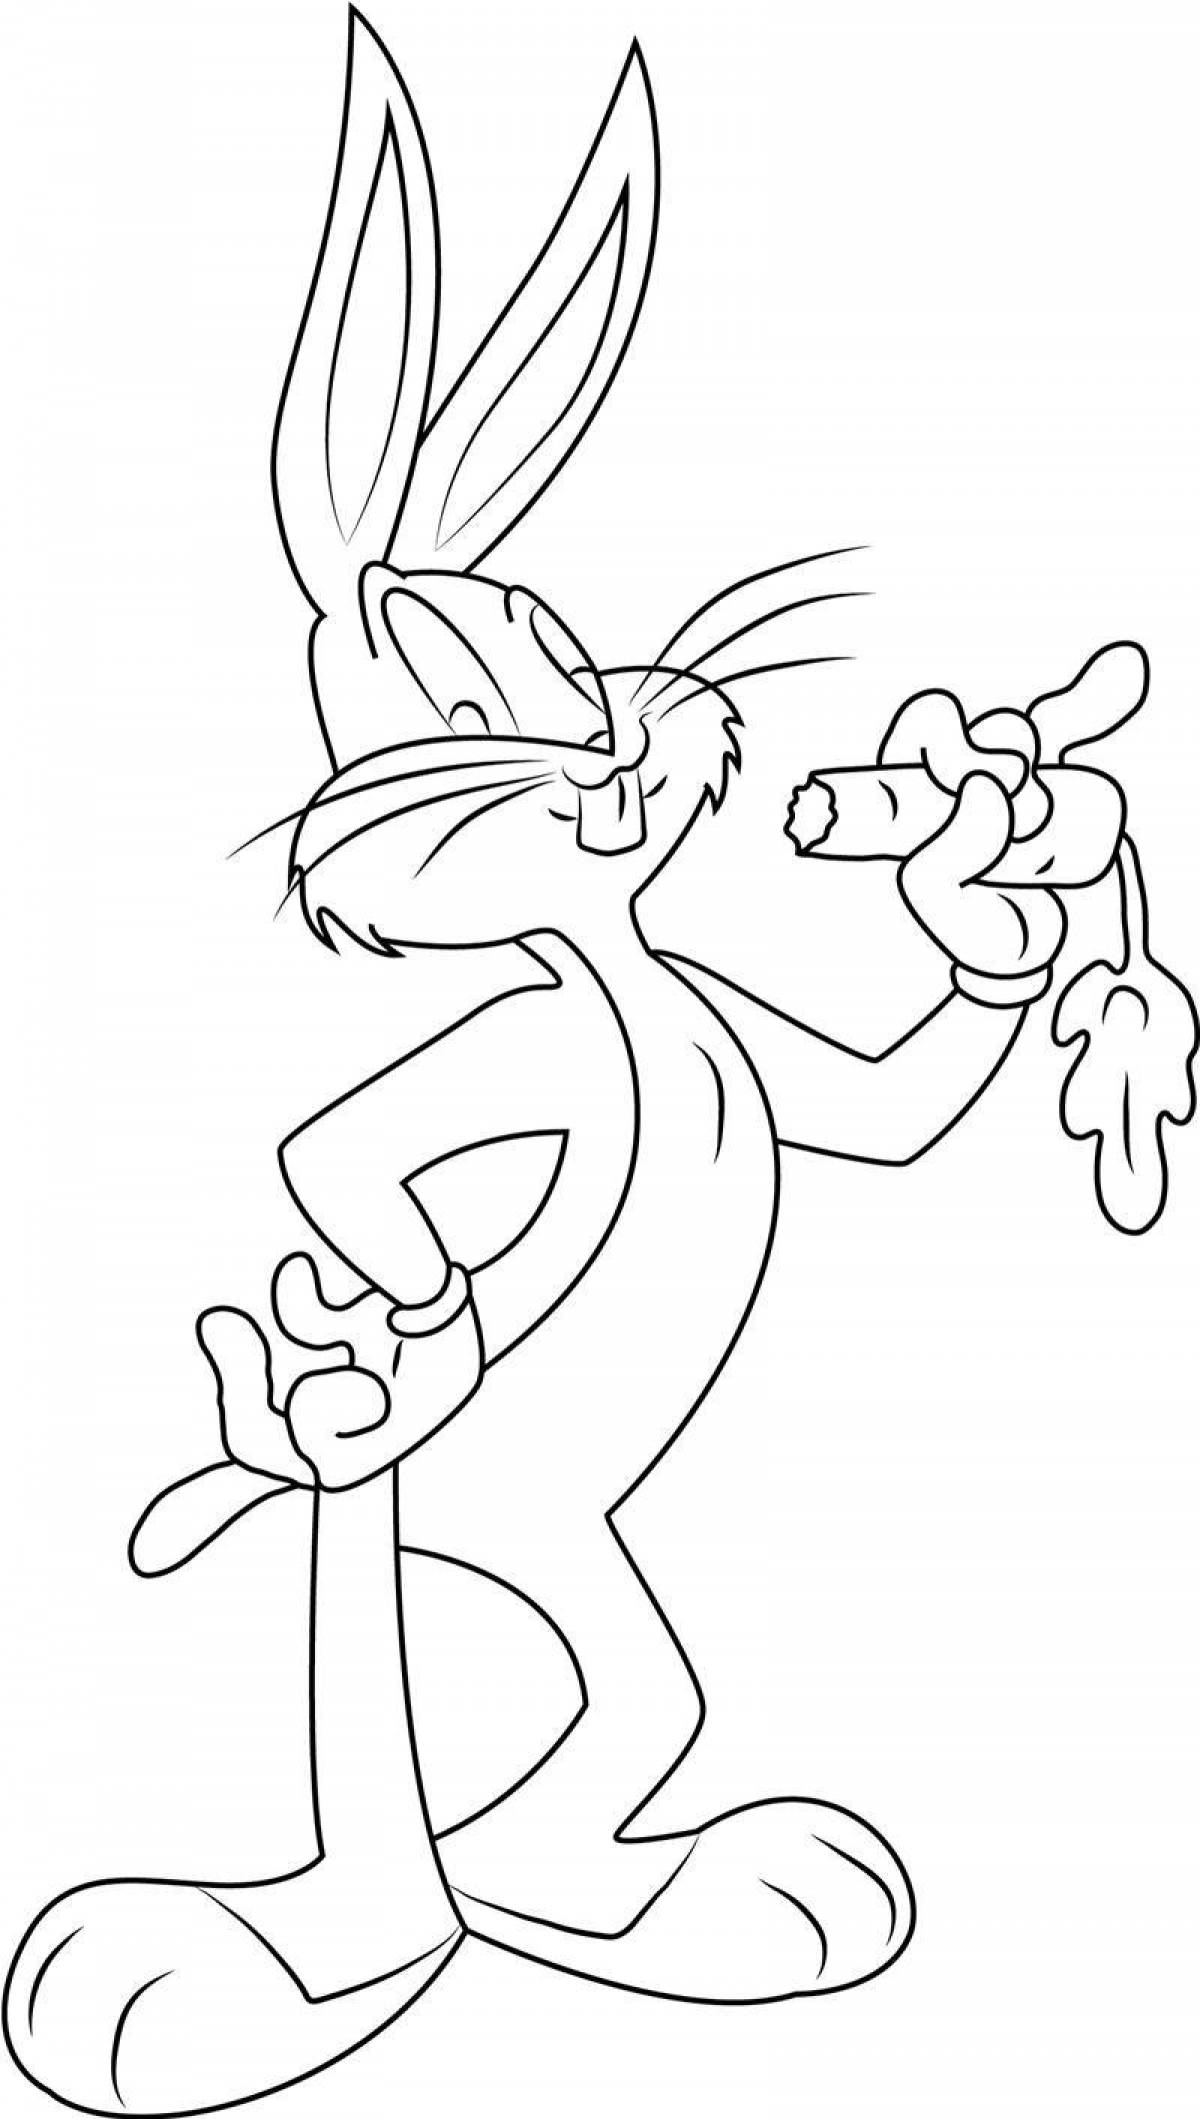 Adorable roger rabbit coloring book